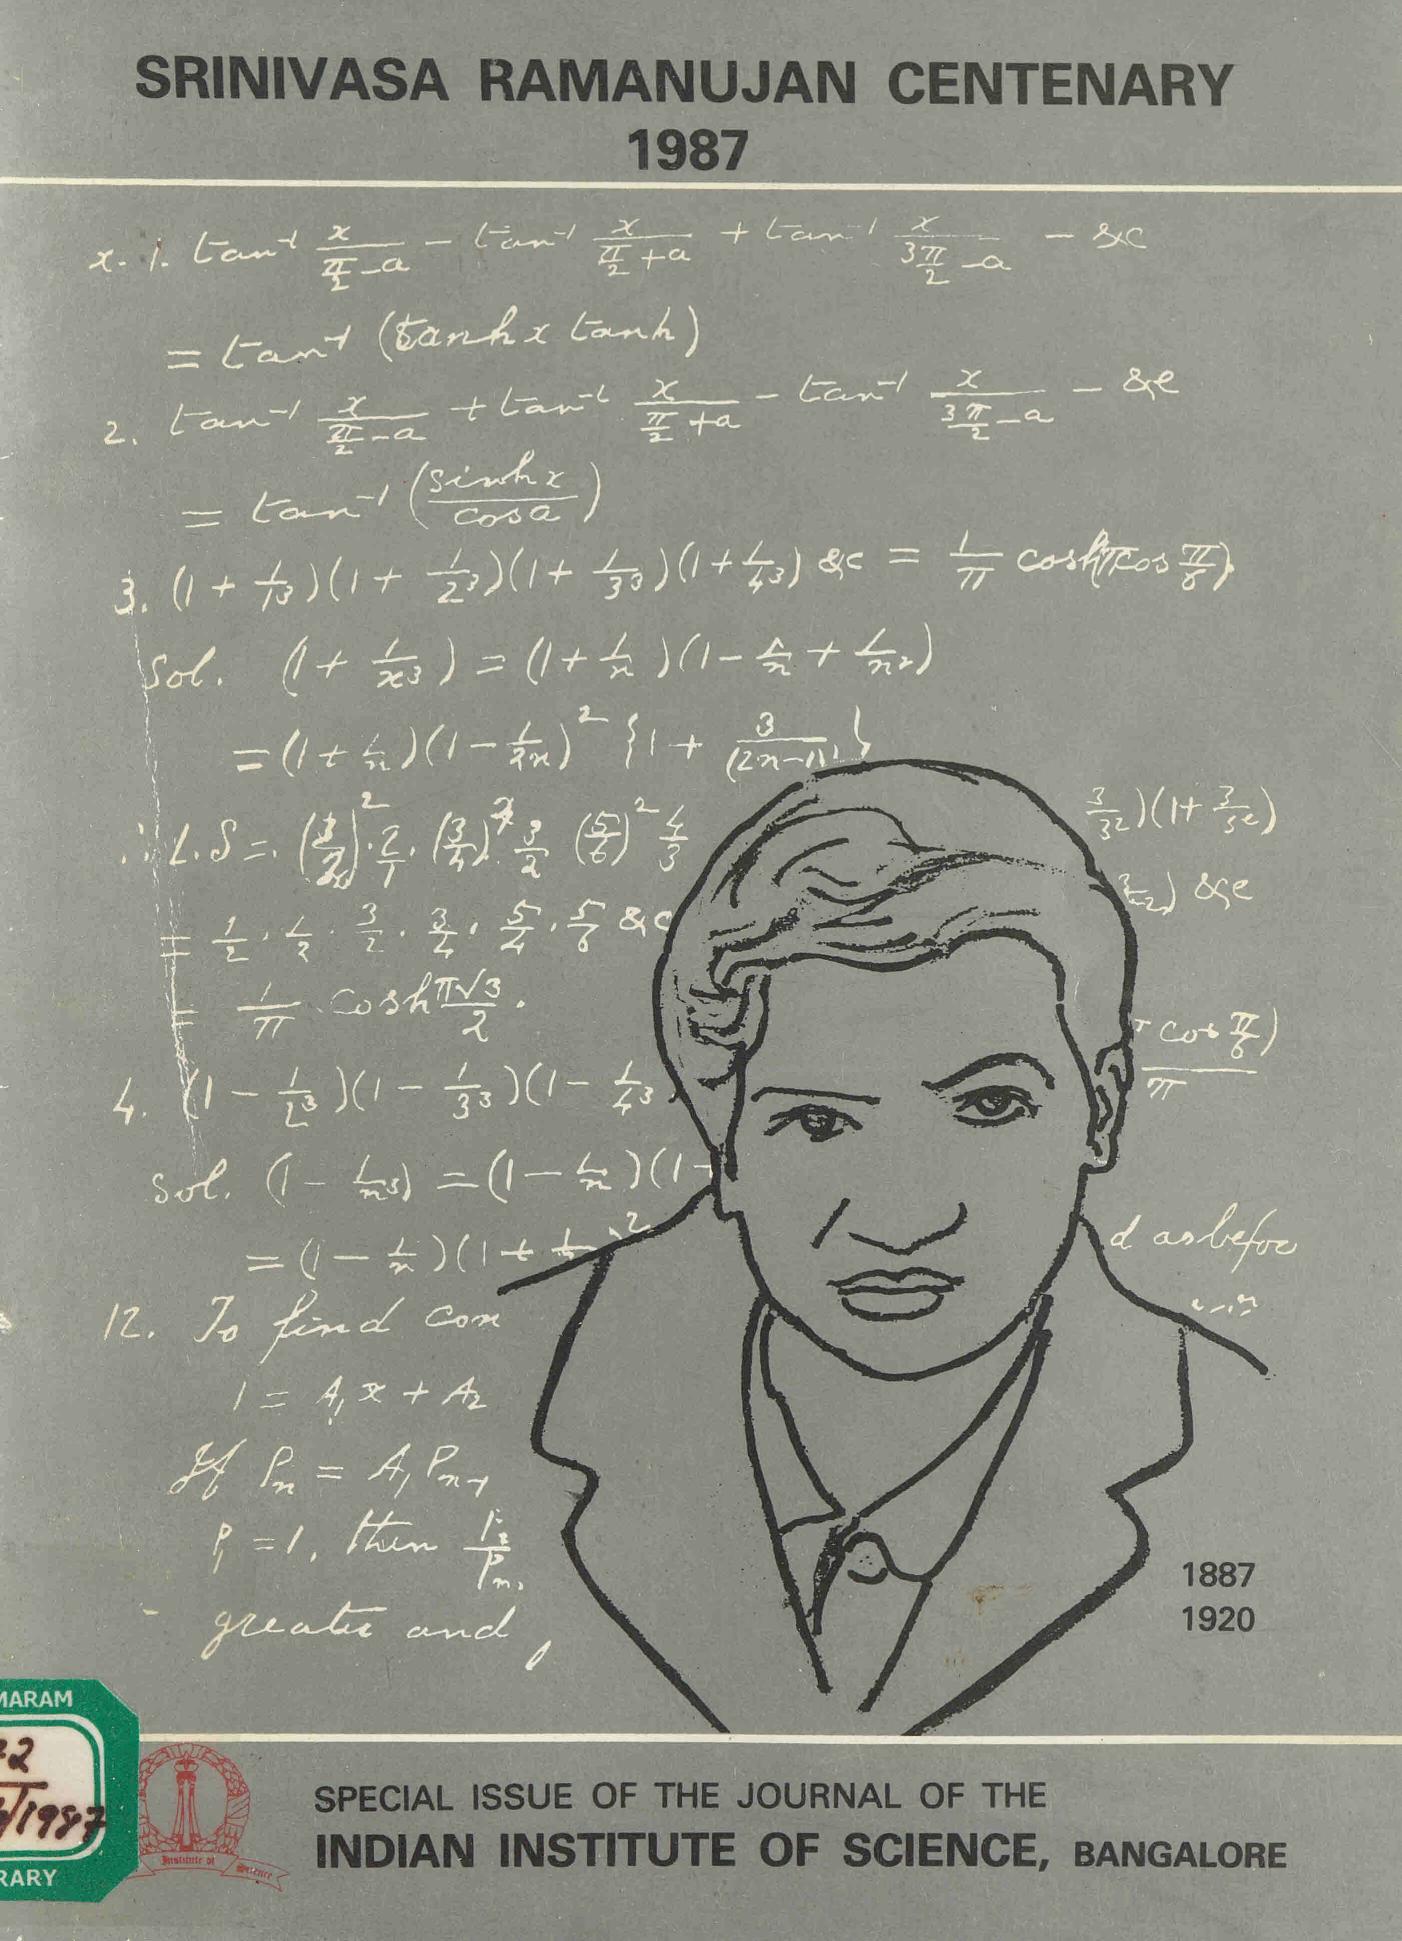 1987 - Srinivasa Ramanujan - Centenary - iisc - journal